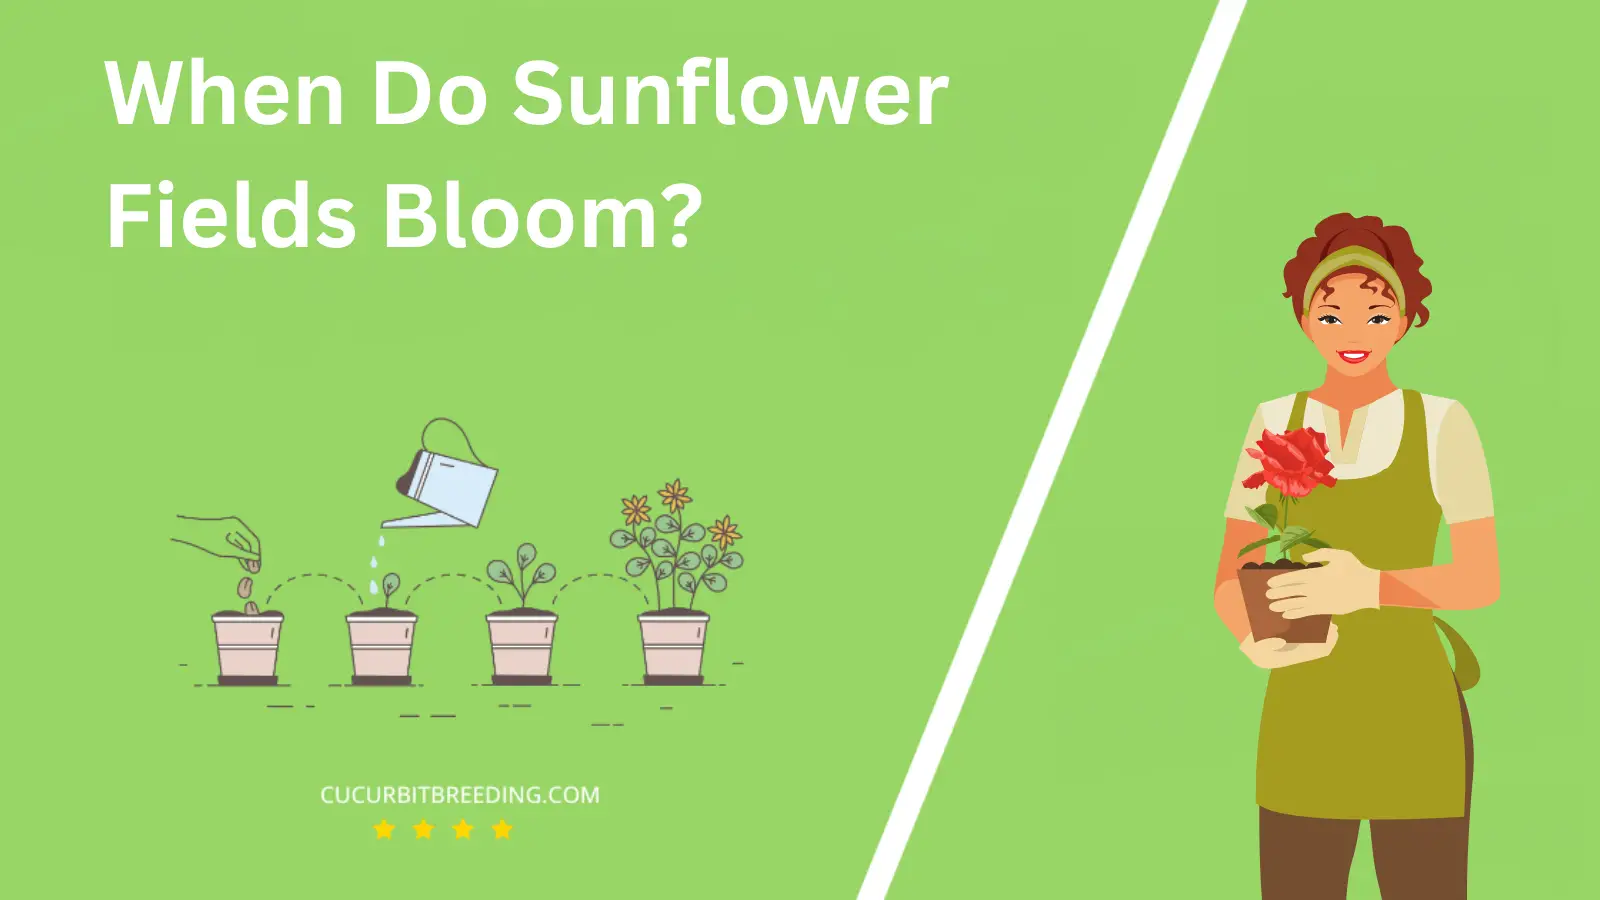 When Do Sunflower Fields Bloom?